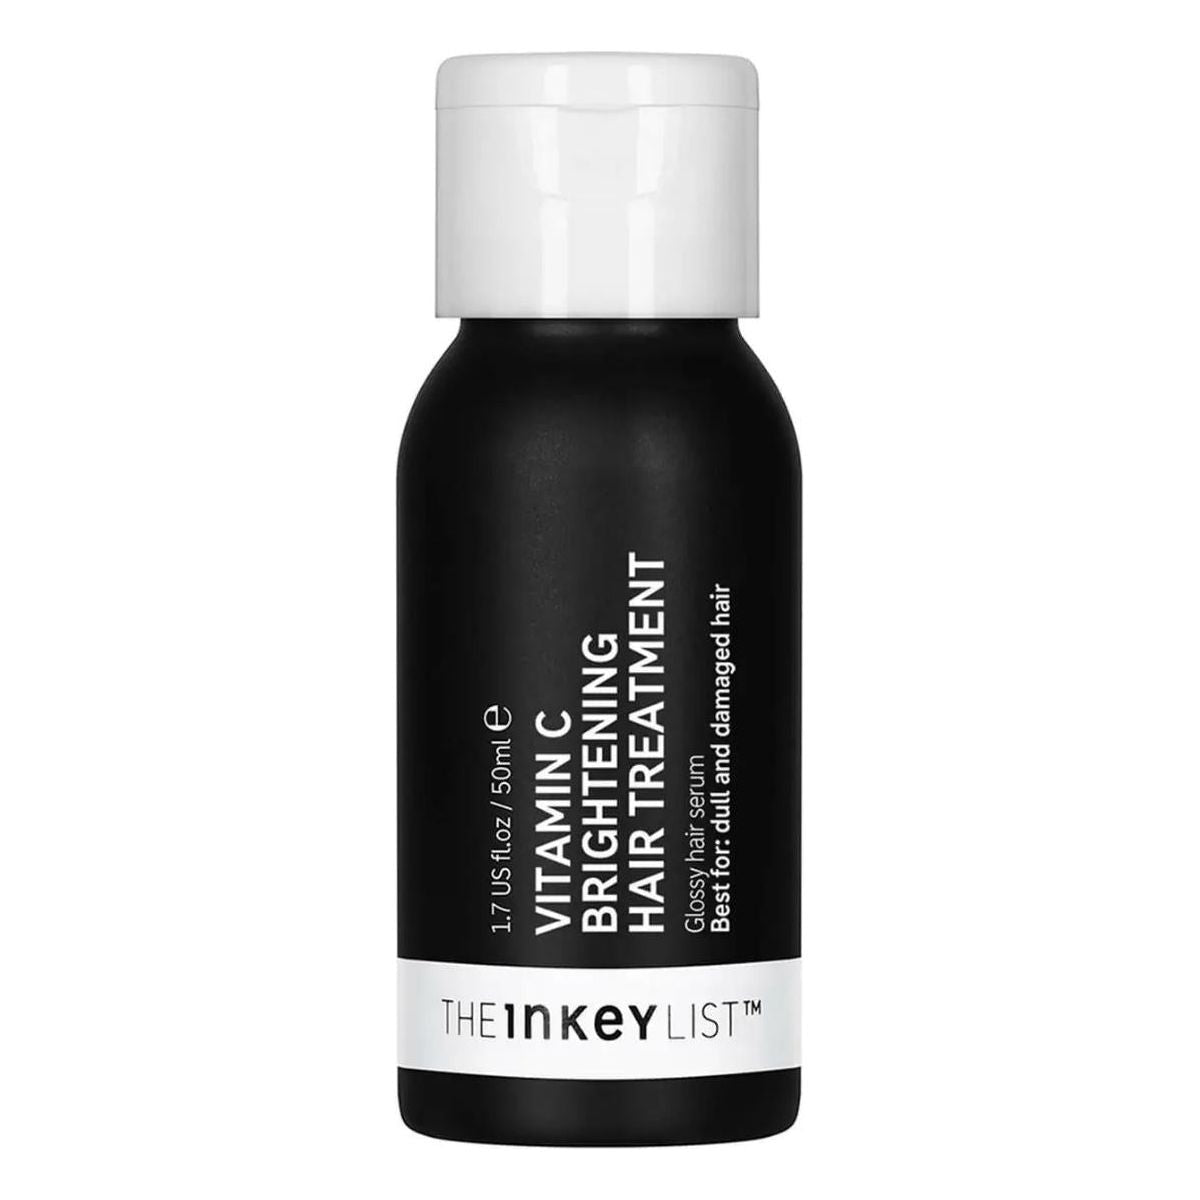 The Inkey List | Vitamin C Brightening Hair Treatment - DG International Ventures Limited